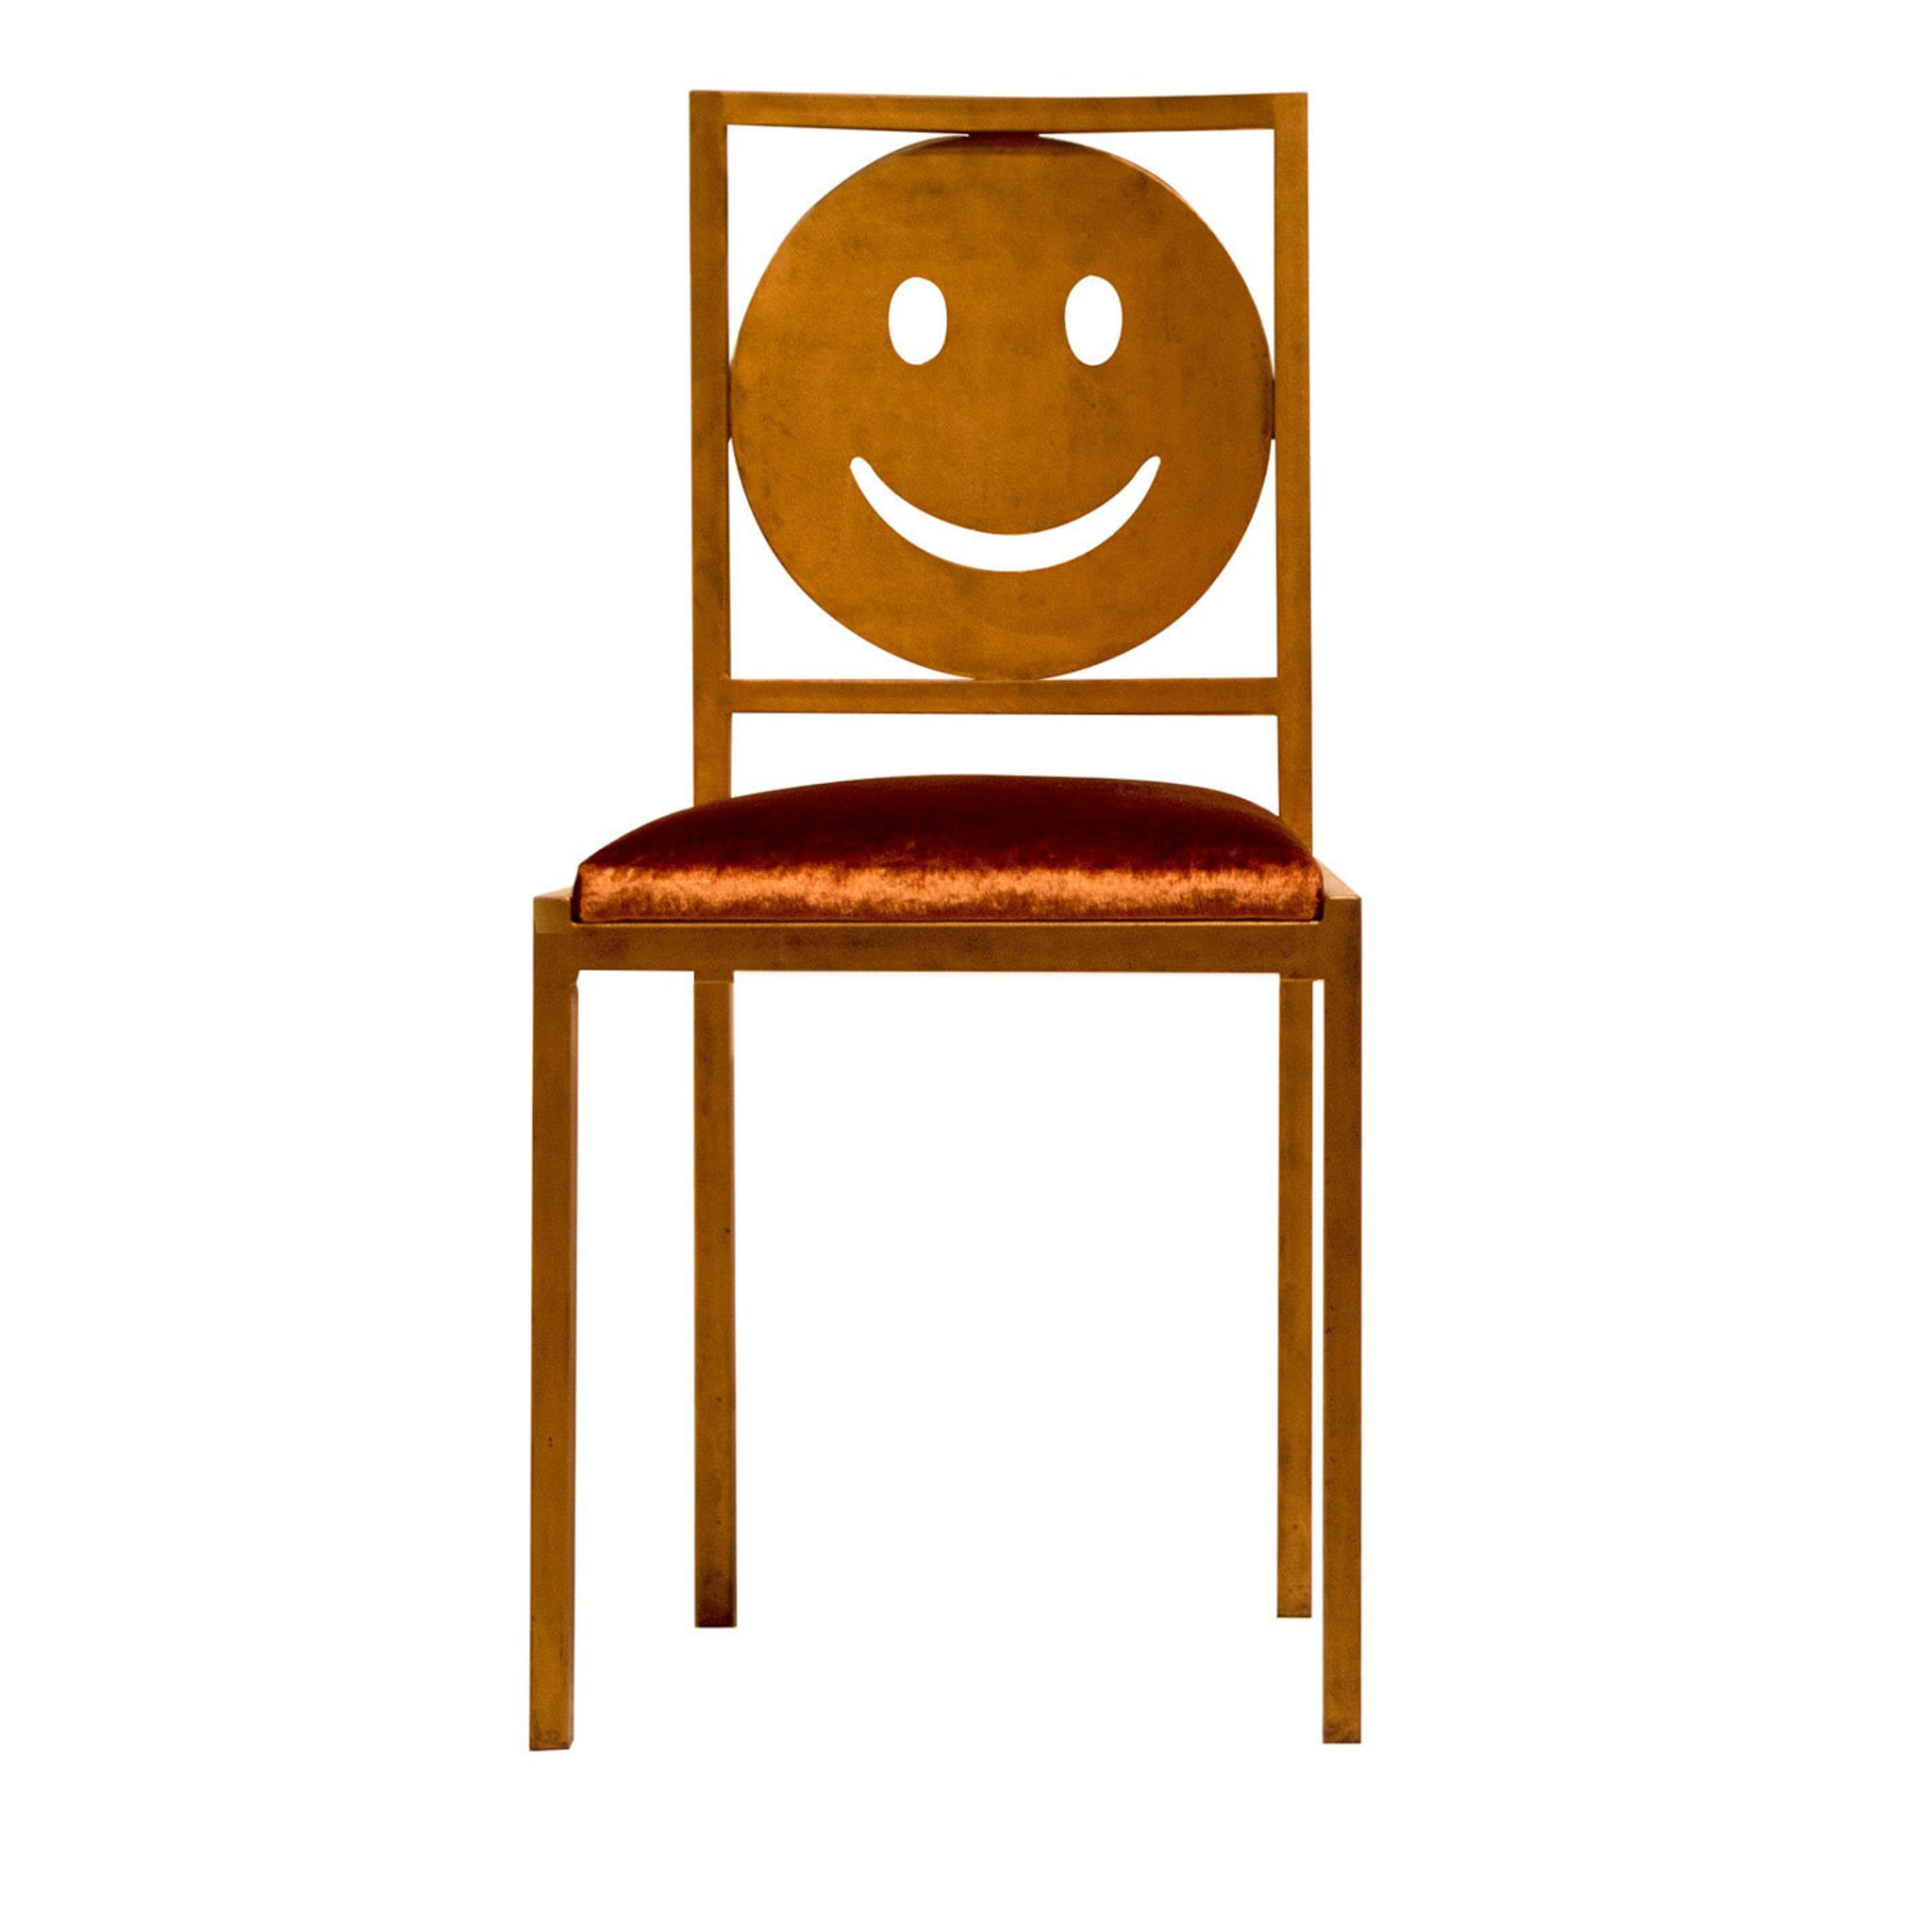 Smile Chair - Main view